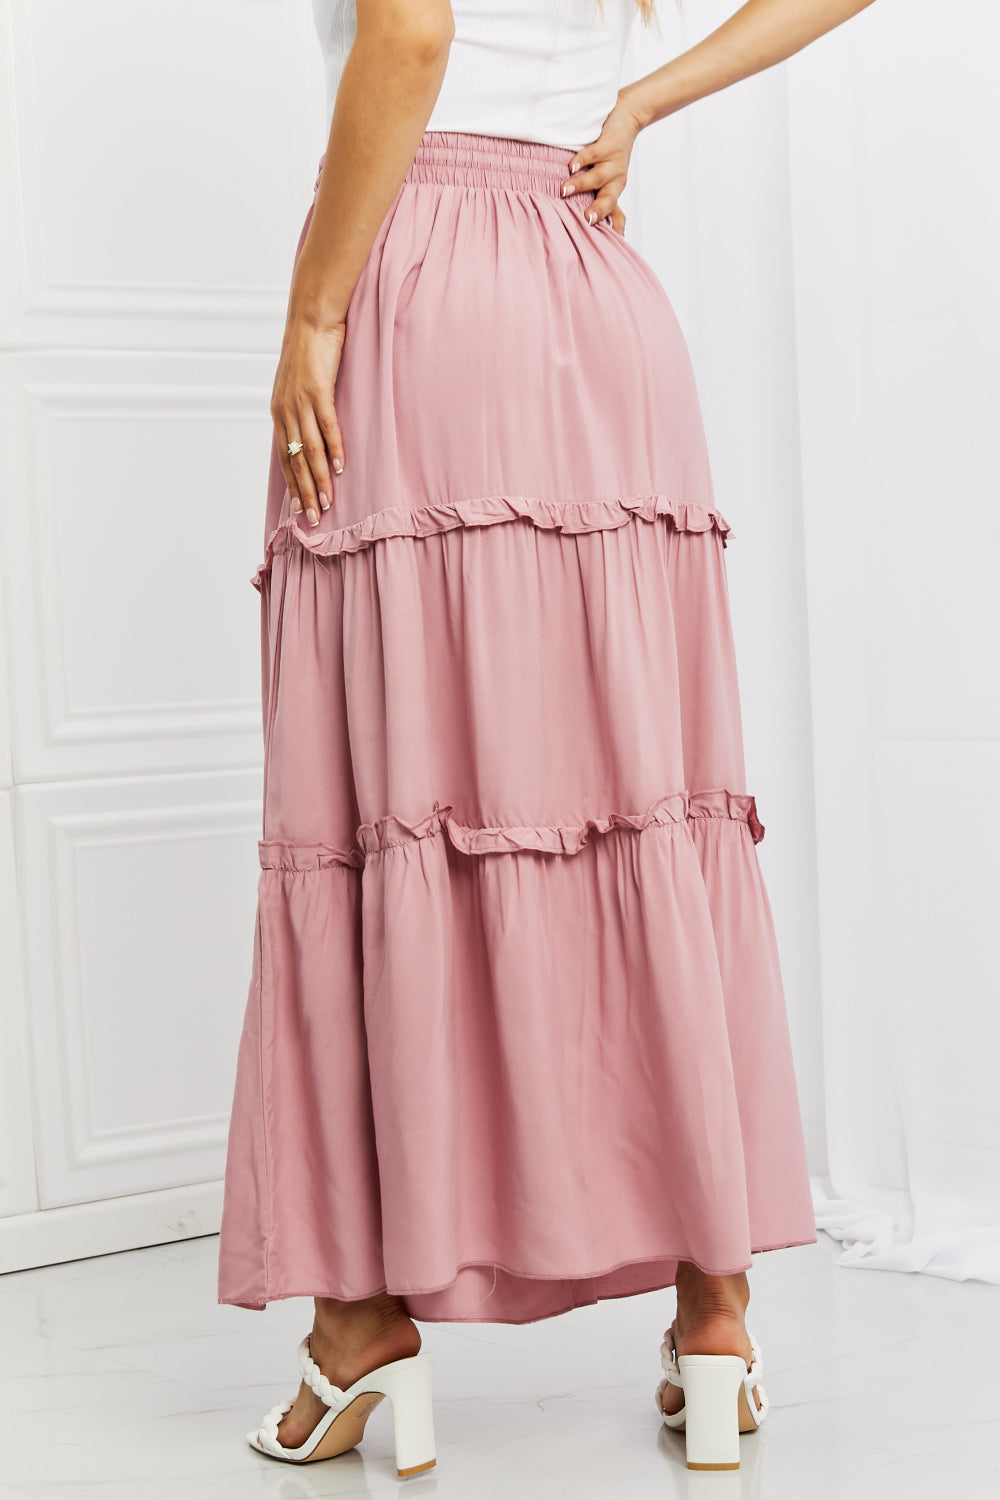 Mariella Maxi Skirt in Mauve Pink